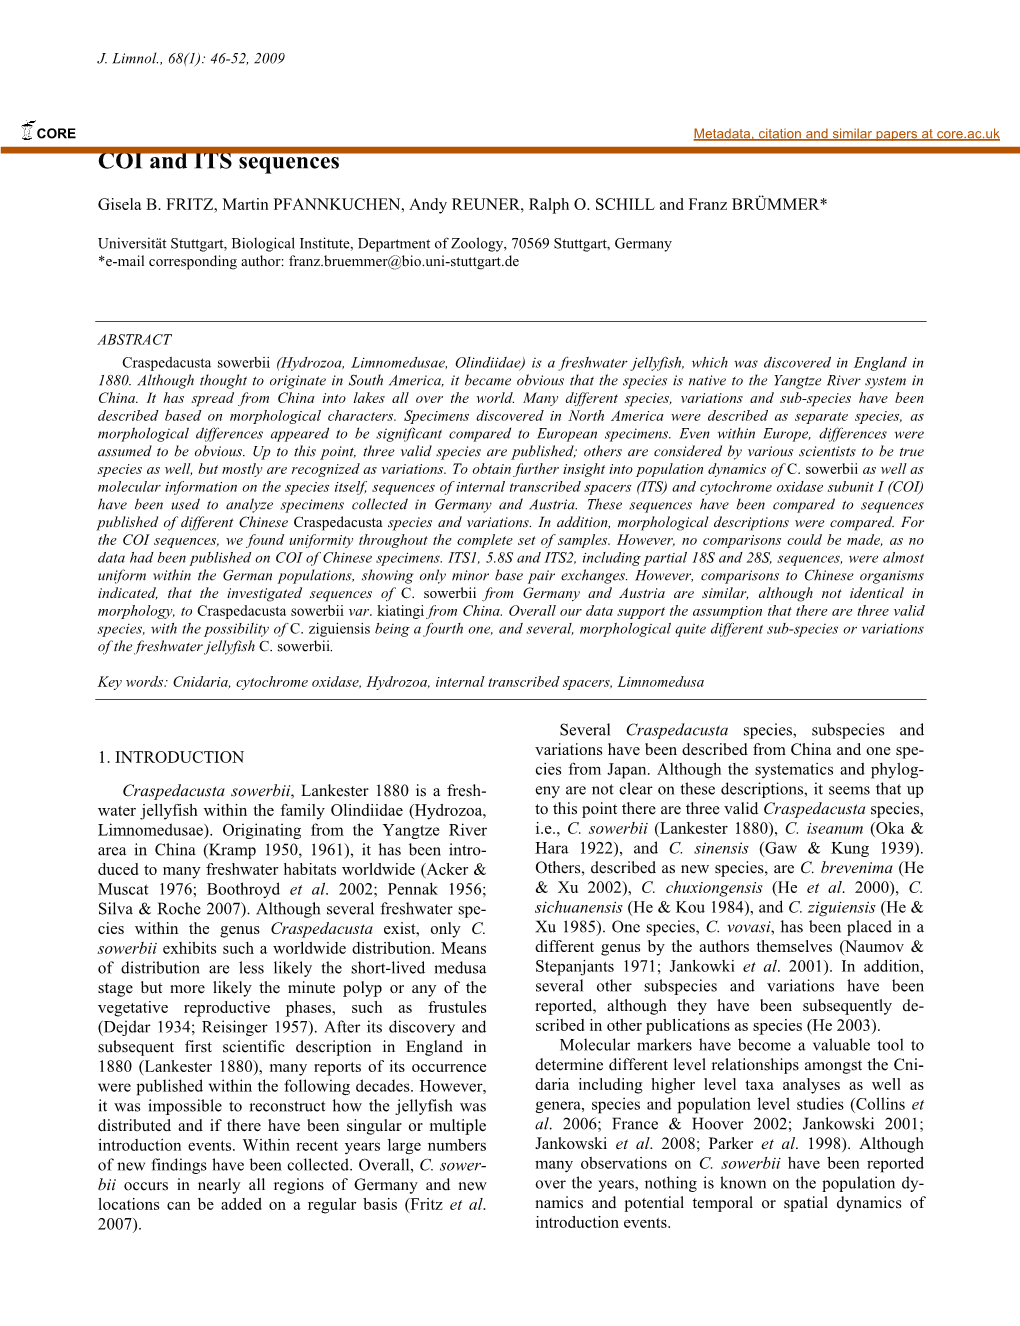 Craspedacusta Sowerbii, Lankester 1880 – Population Dispersalmetadata, Analysis Citation and Using Similar Papers at Core.Ac.Uk COI and ITS Sequences